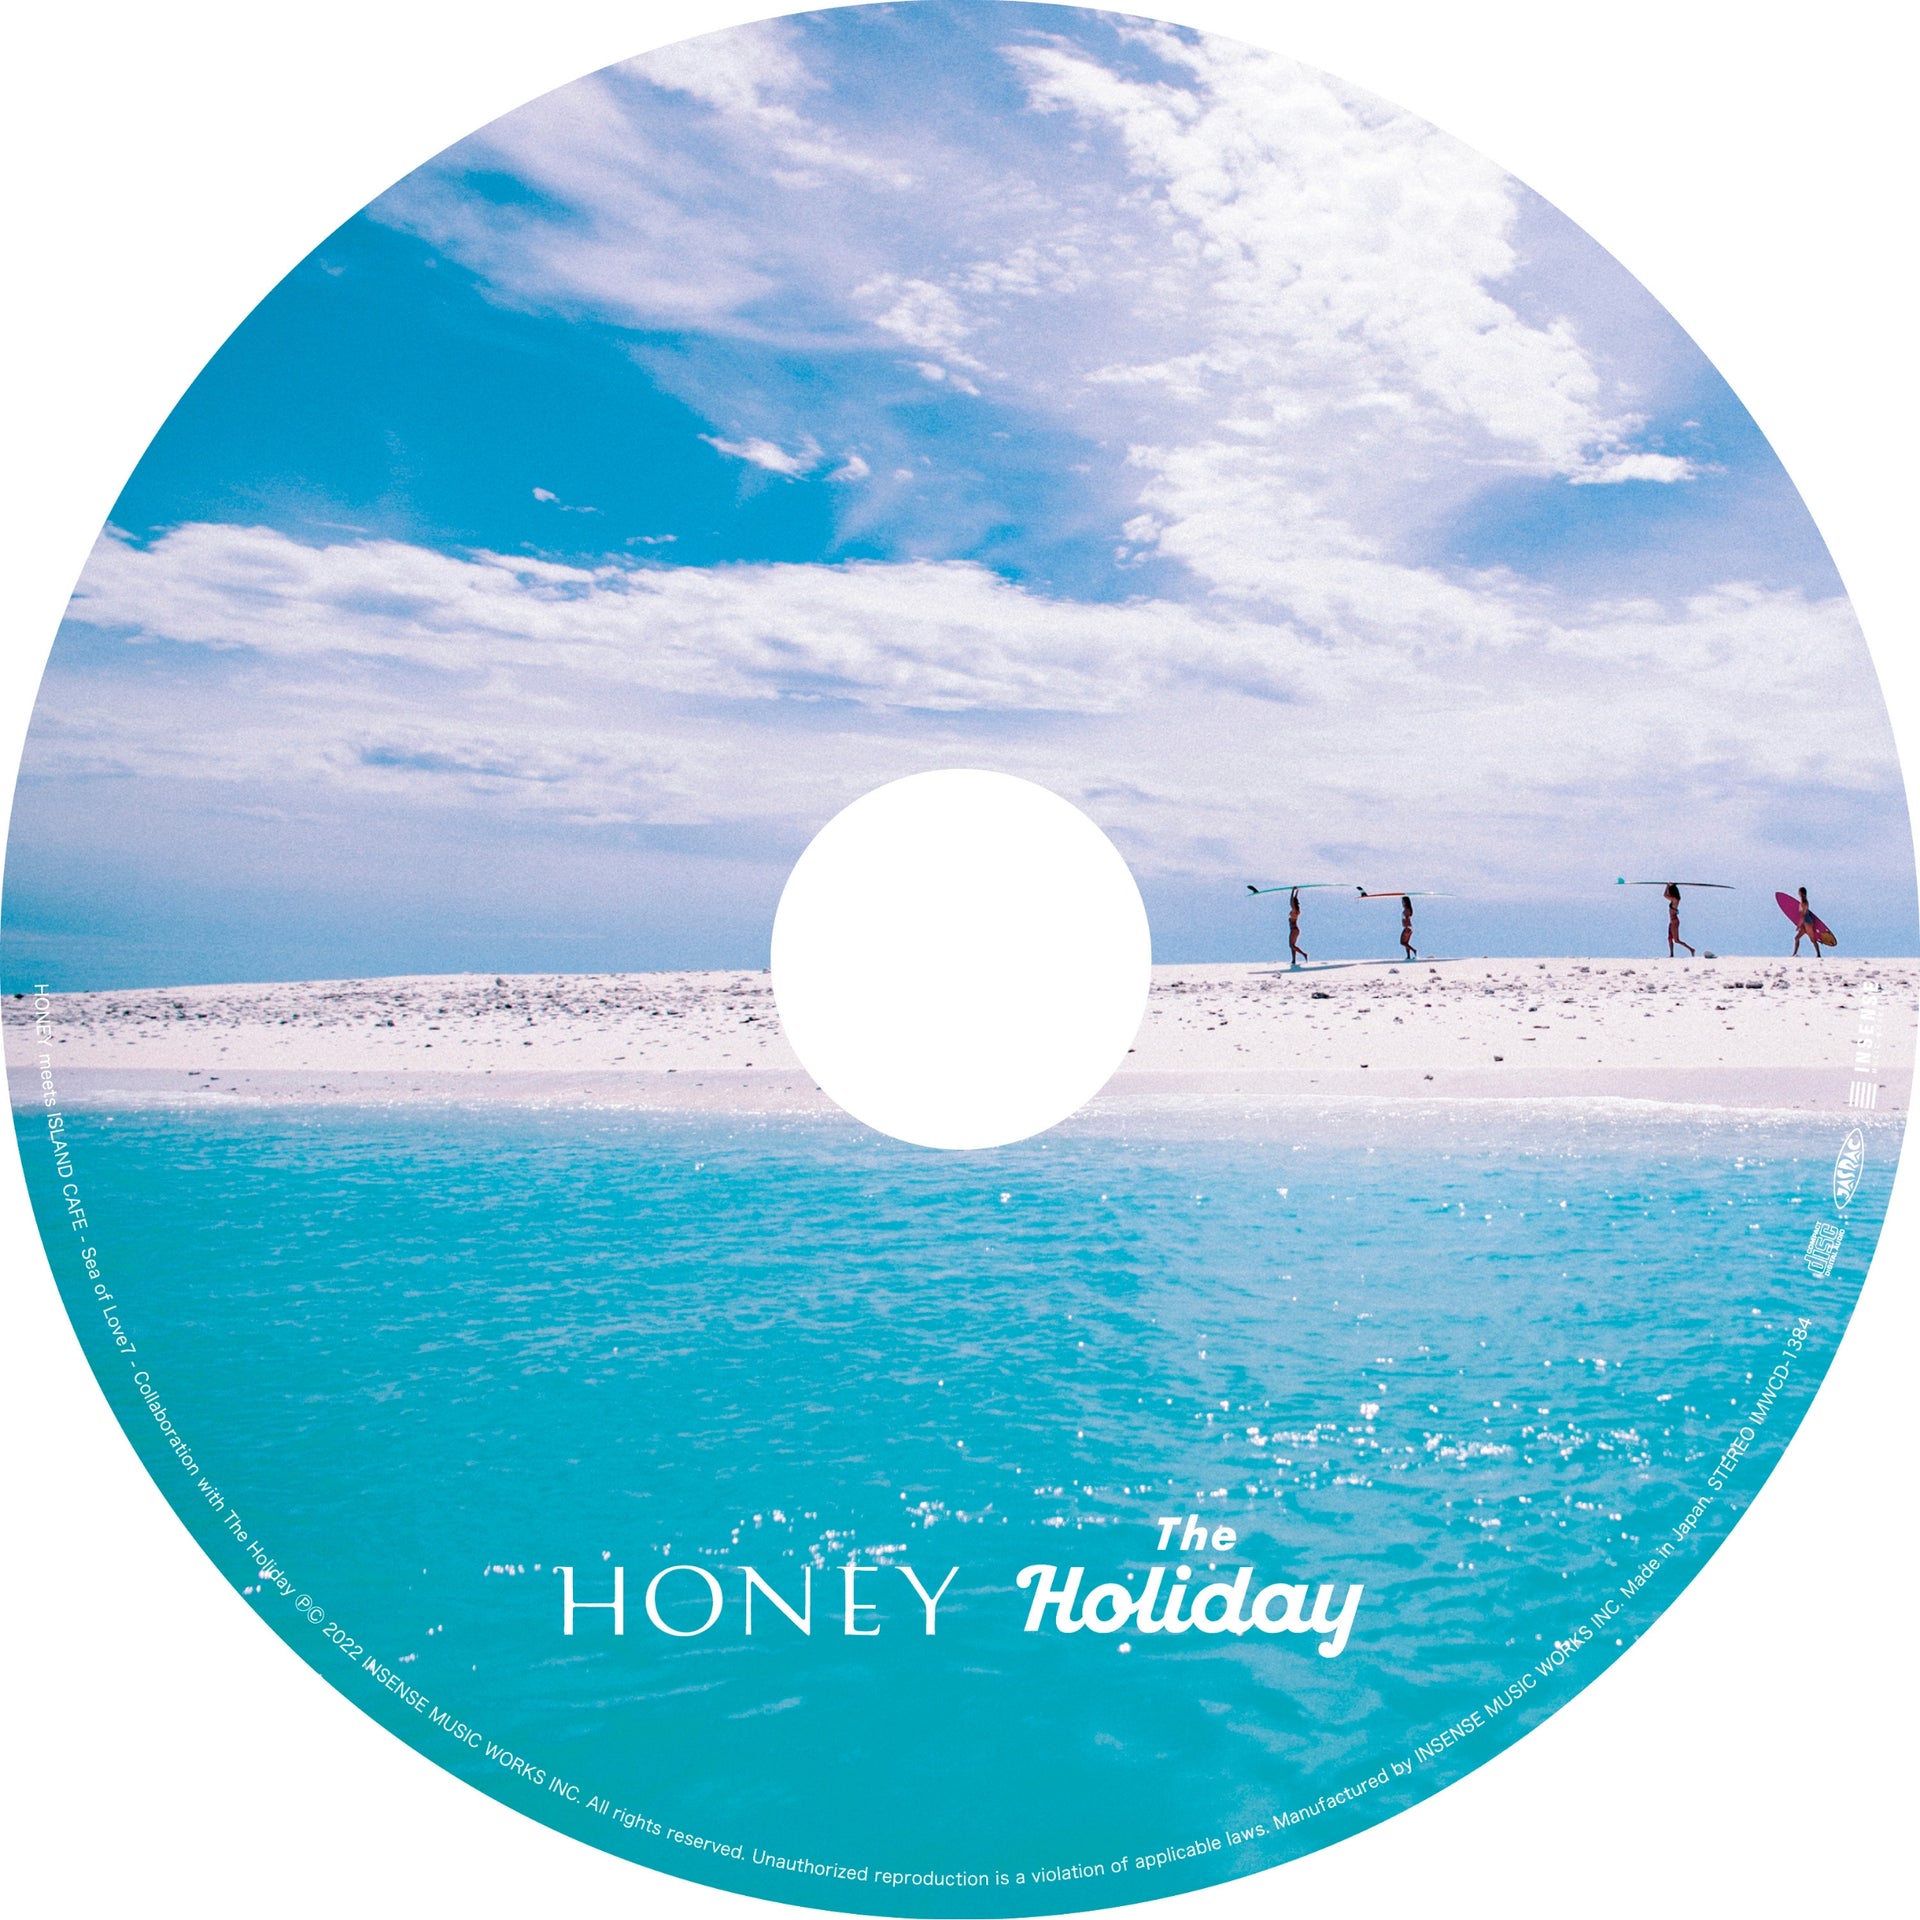 HONEY meets ISLAND CAFE - Sea of Love7 -